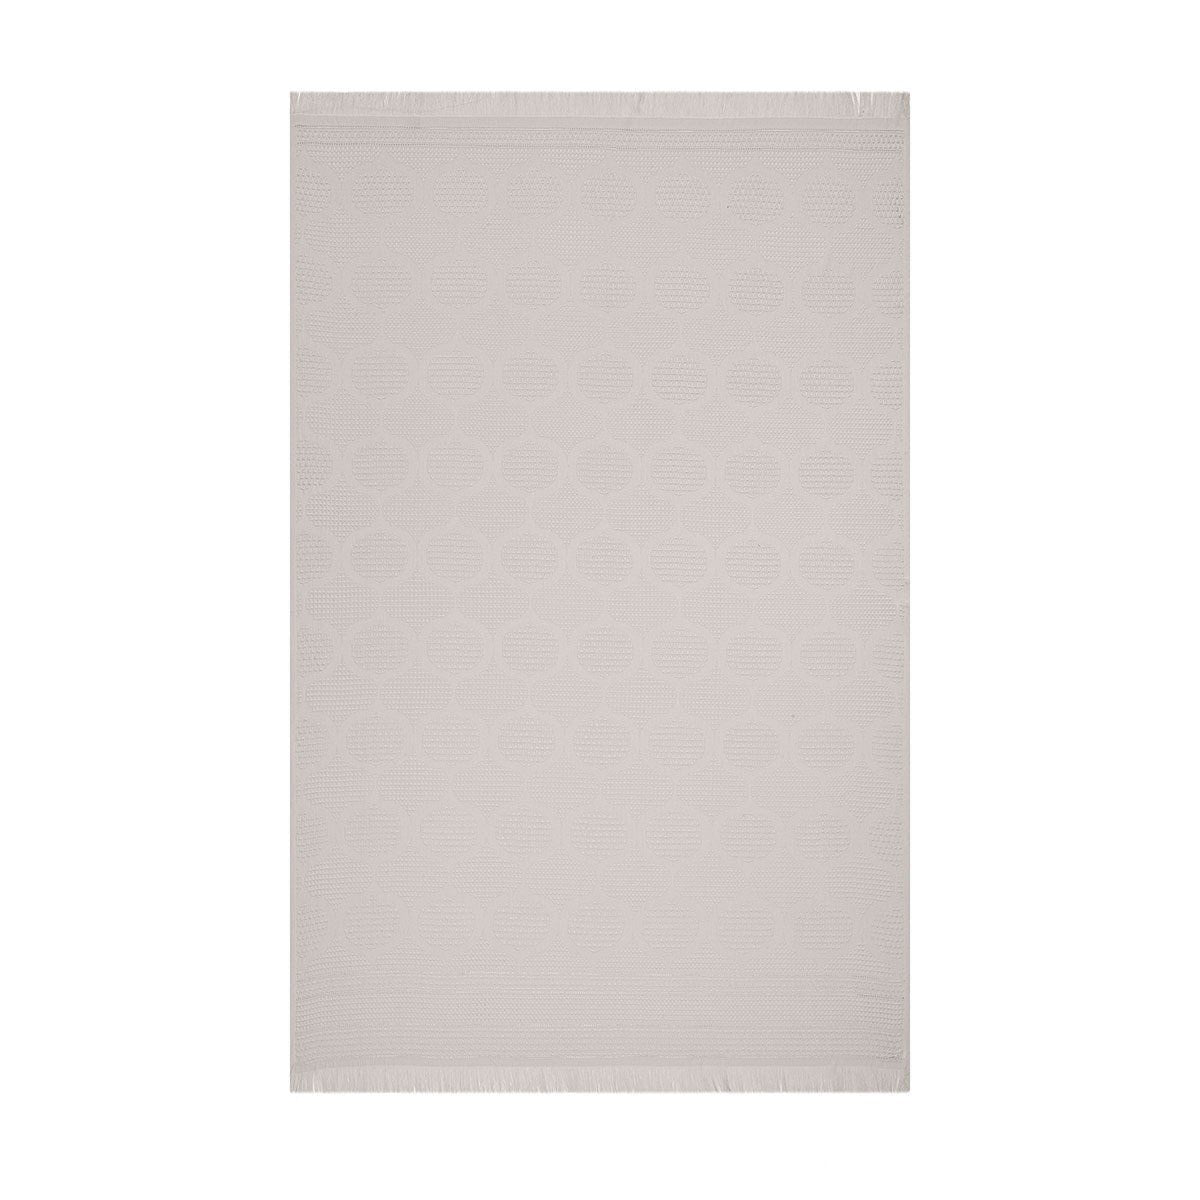 Hera Brown Bath Collection by Le Jacquard Français | Fig Linens - White, Brown Towels